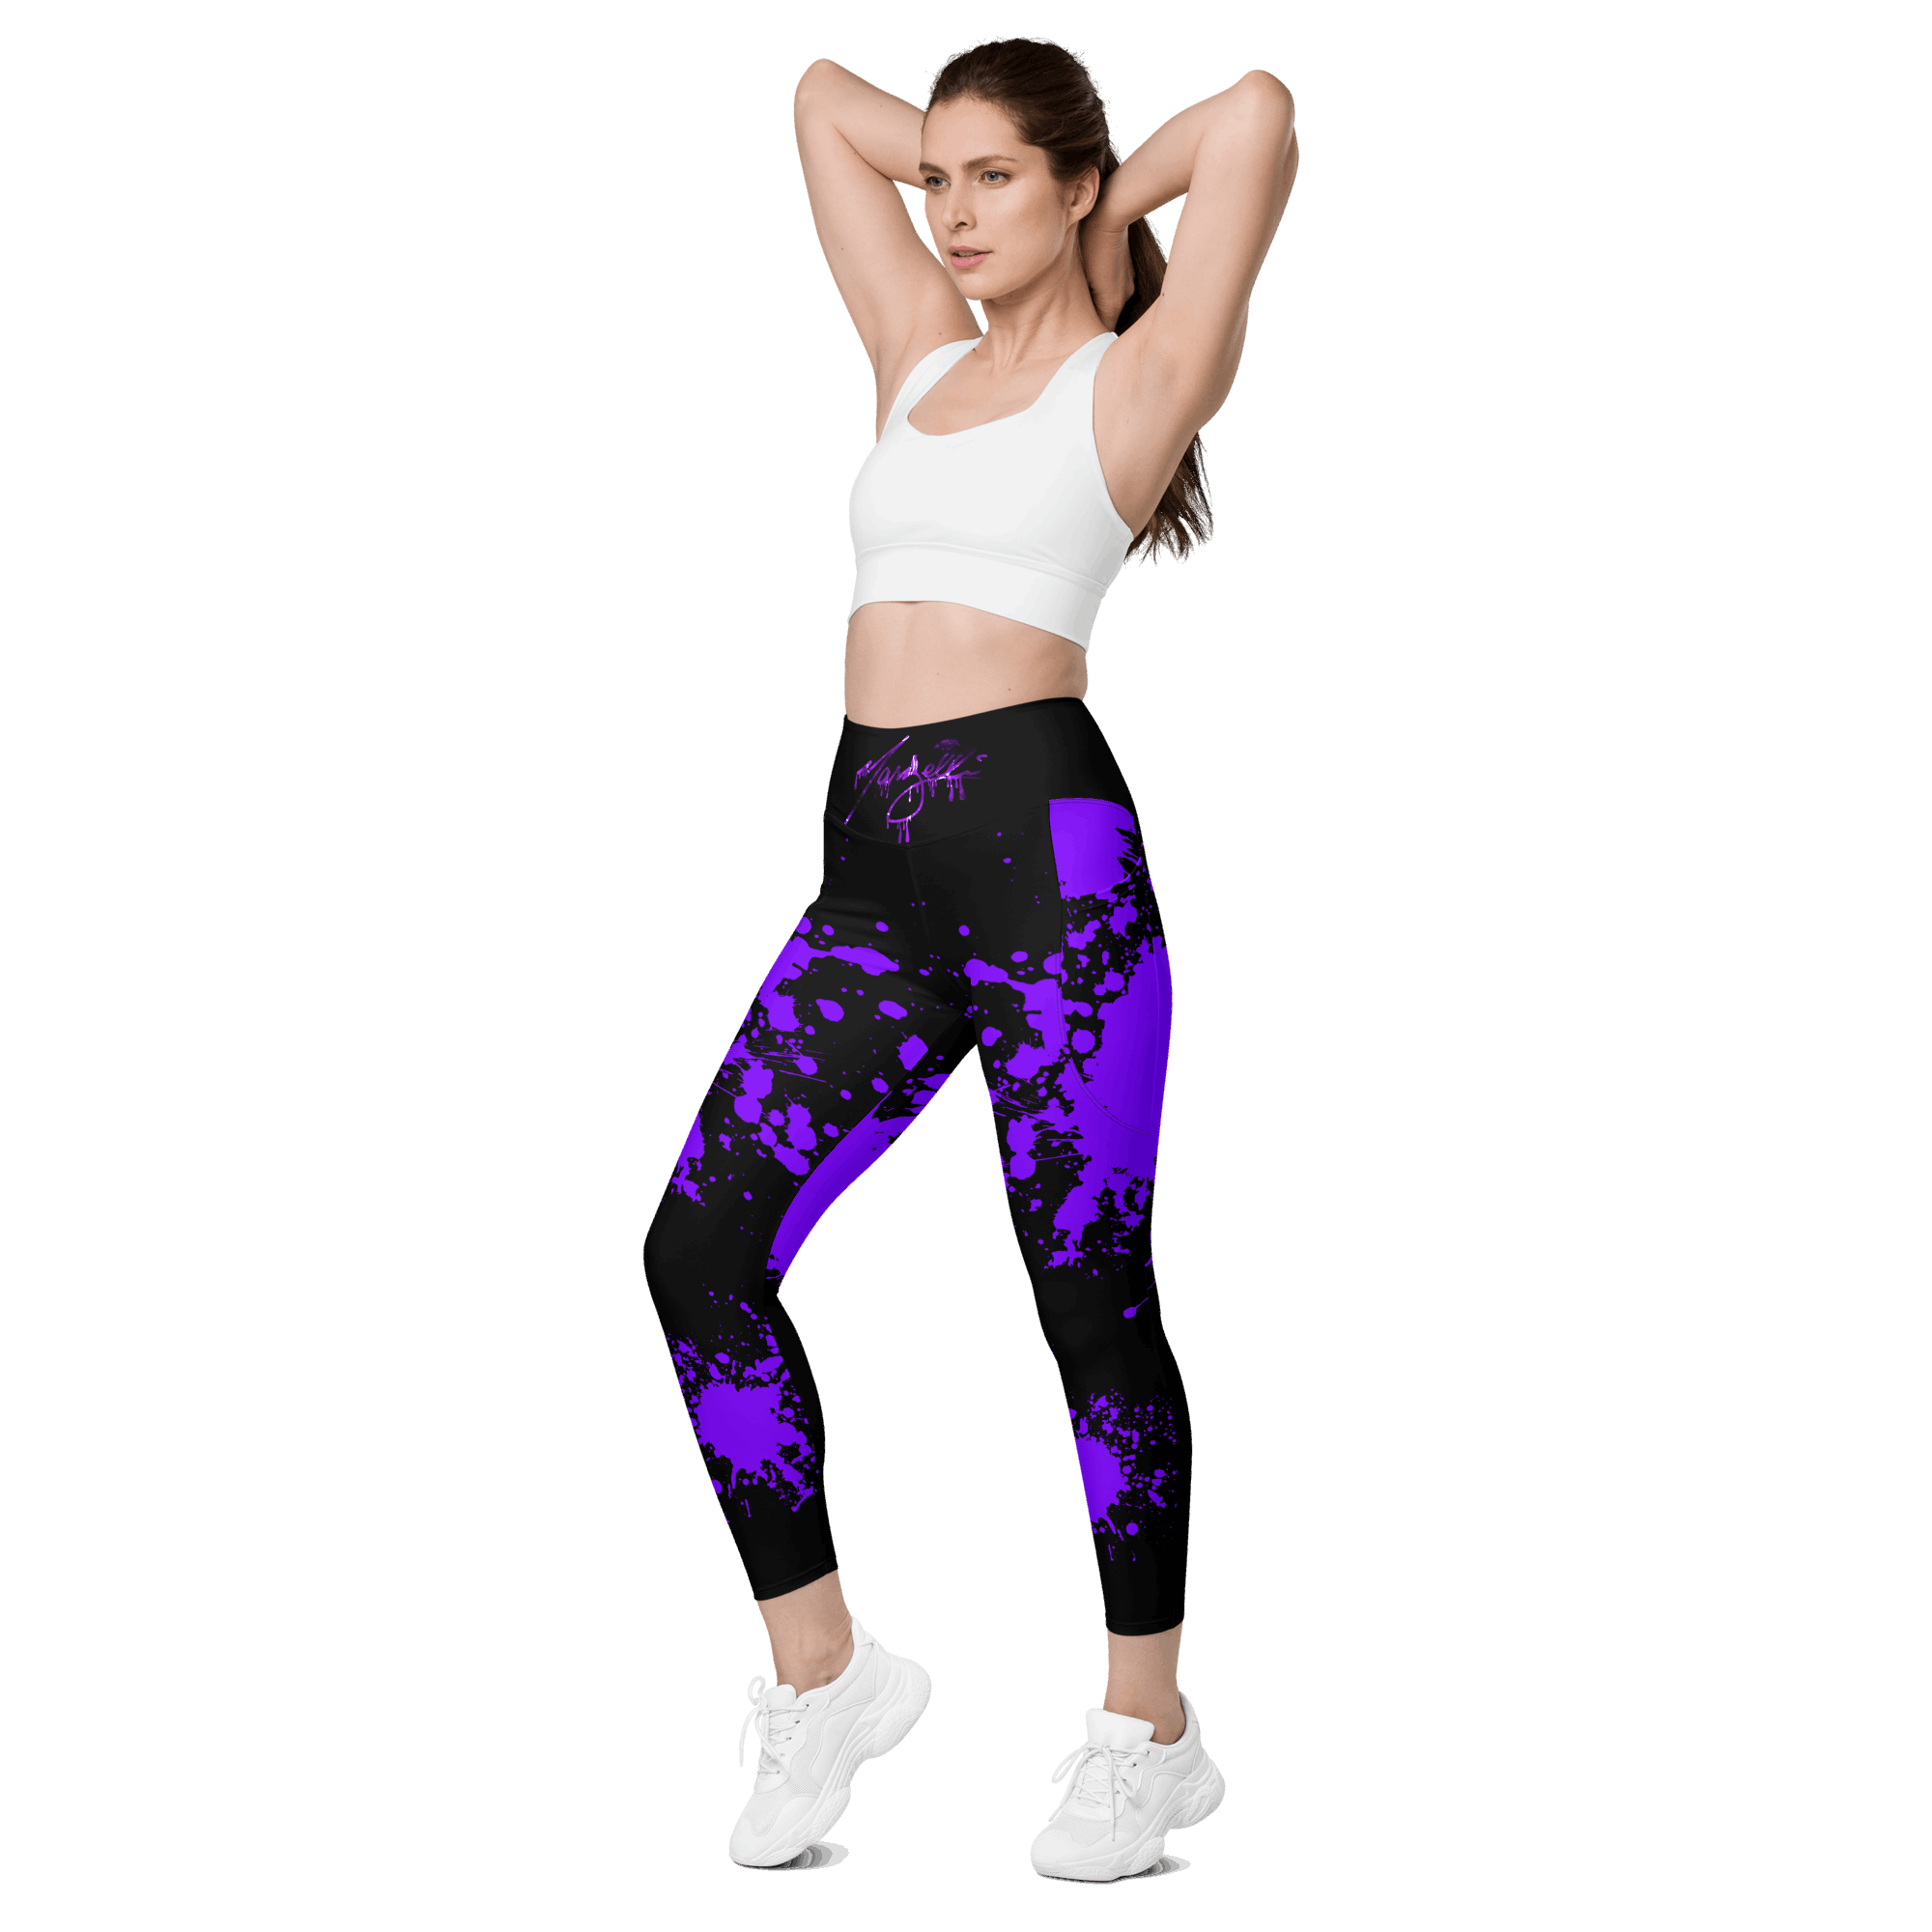 Black and White purple Galaxy Leggings, Printed Leggings, Yoga Pants,  Running Pants, Pocket Leggings, Leggings With Pockets 